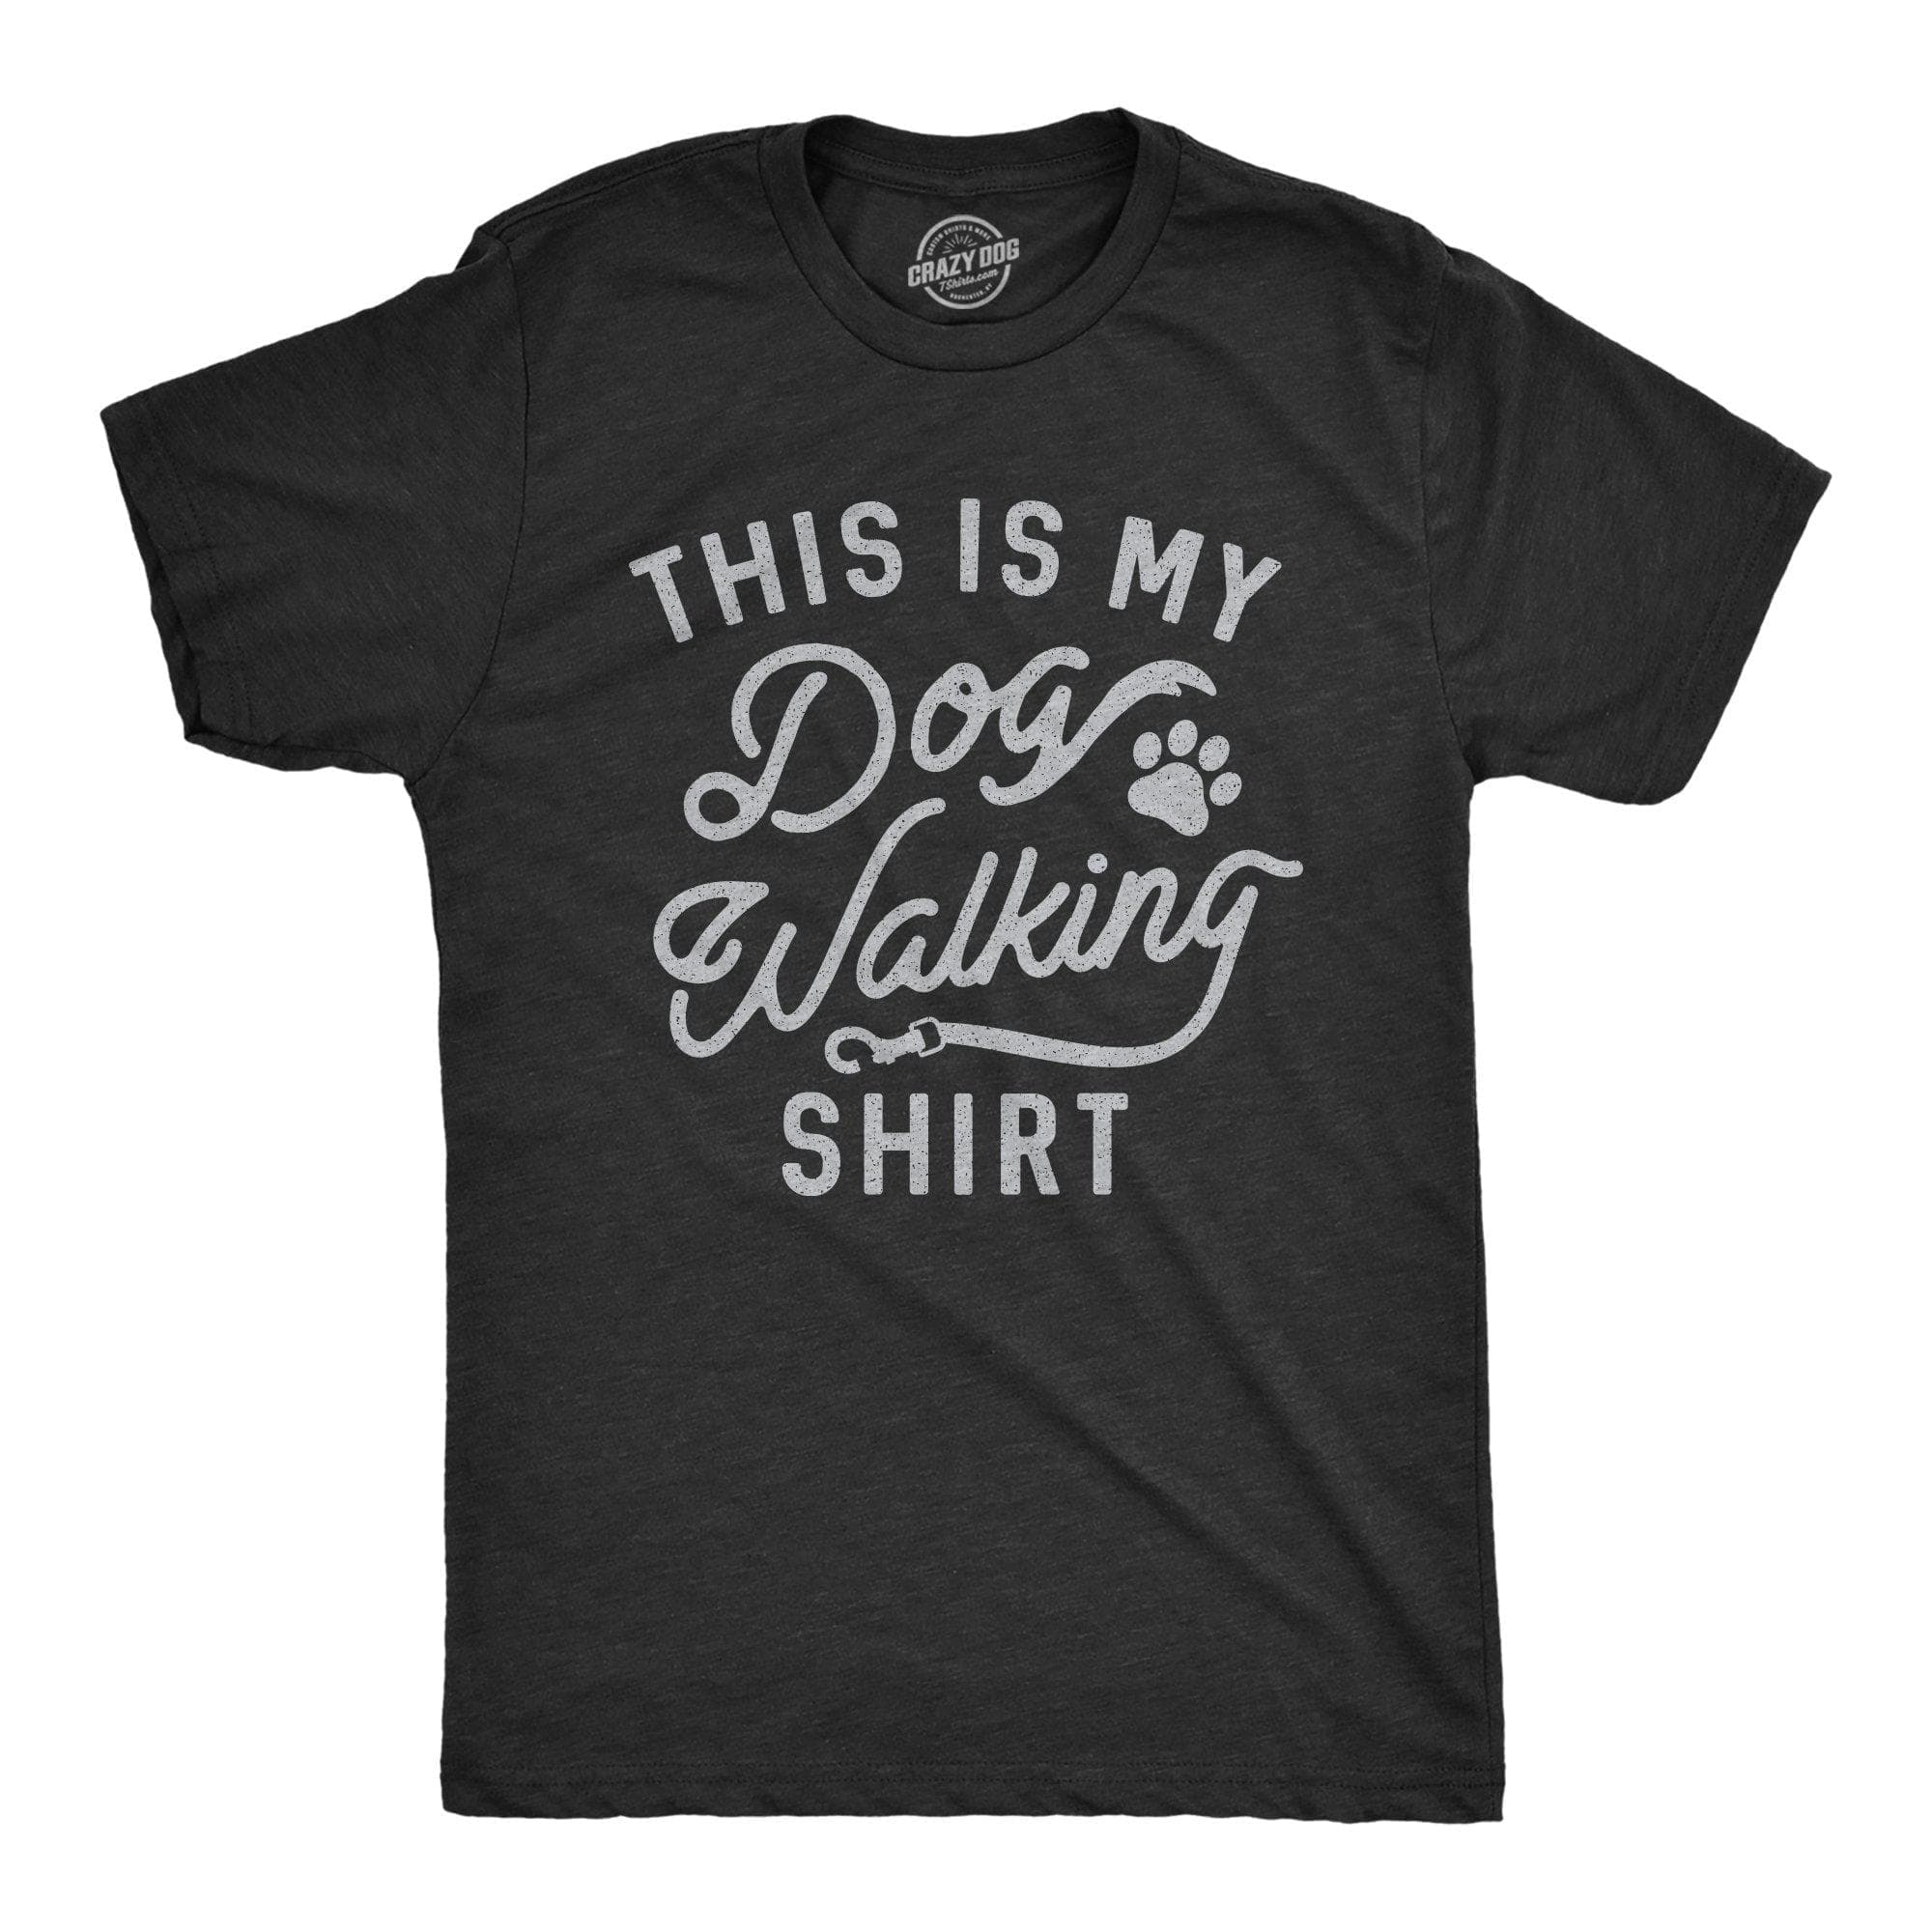 This Is My Dog Walking Shirt Men's Tshirt - Crazy Dog T-Shirts